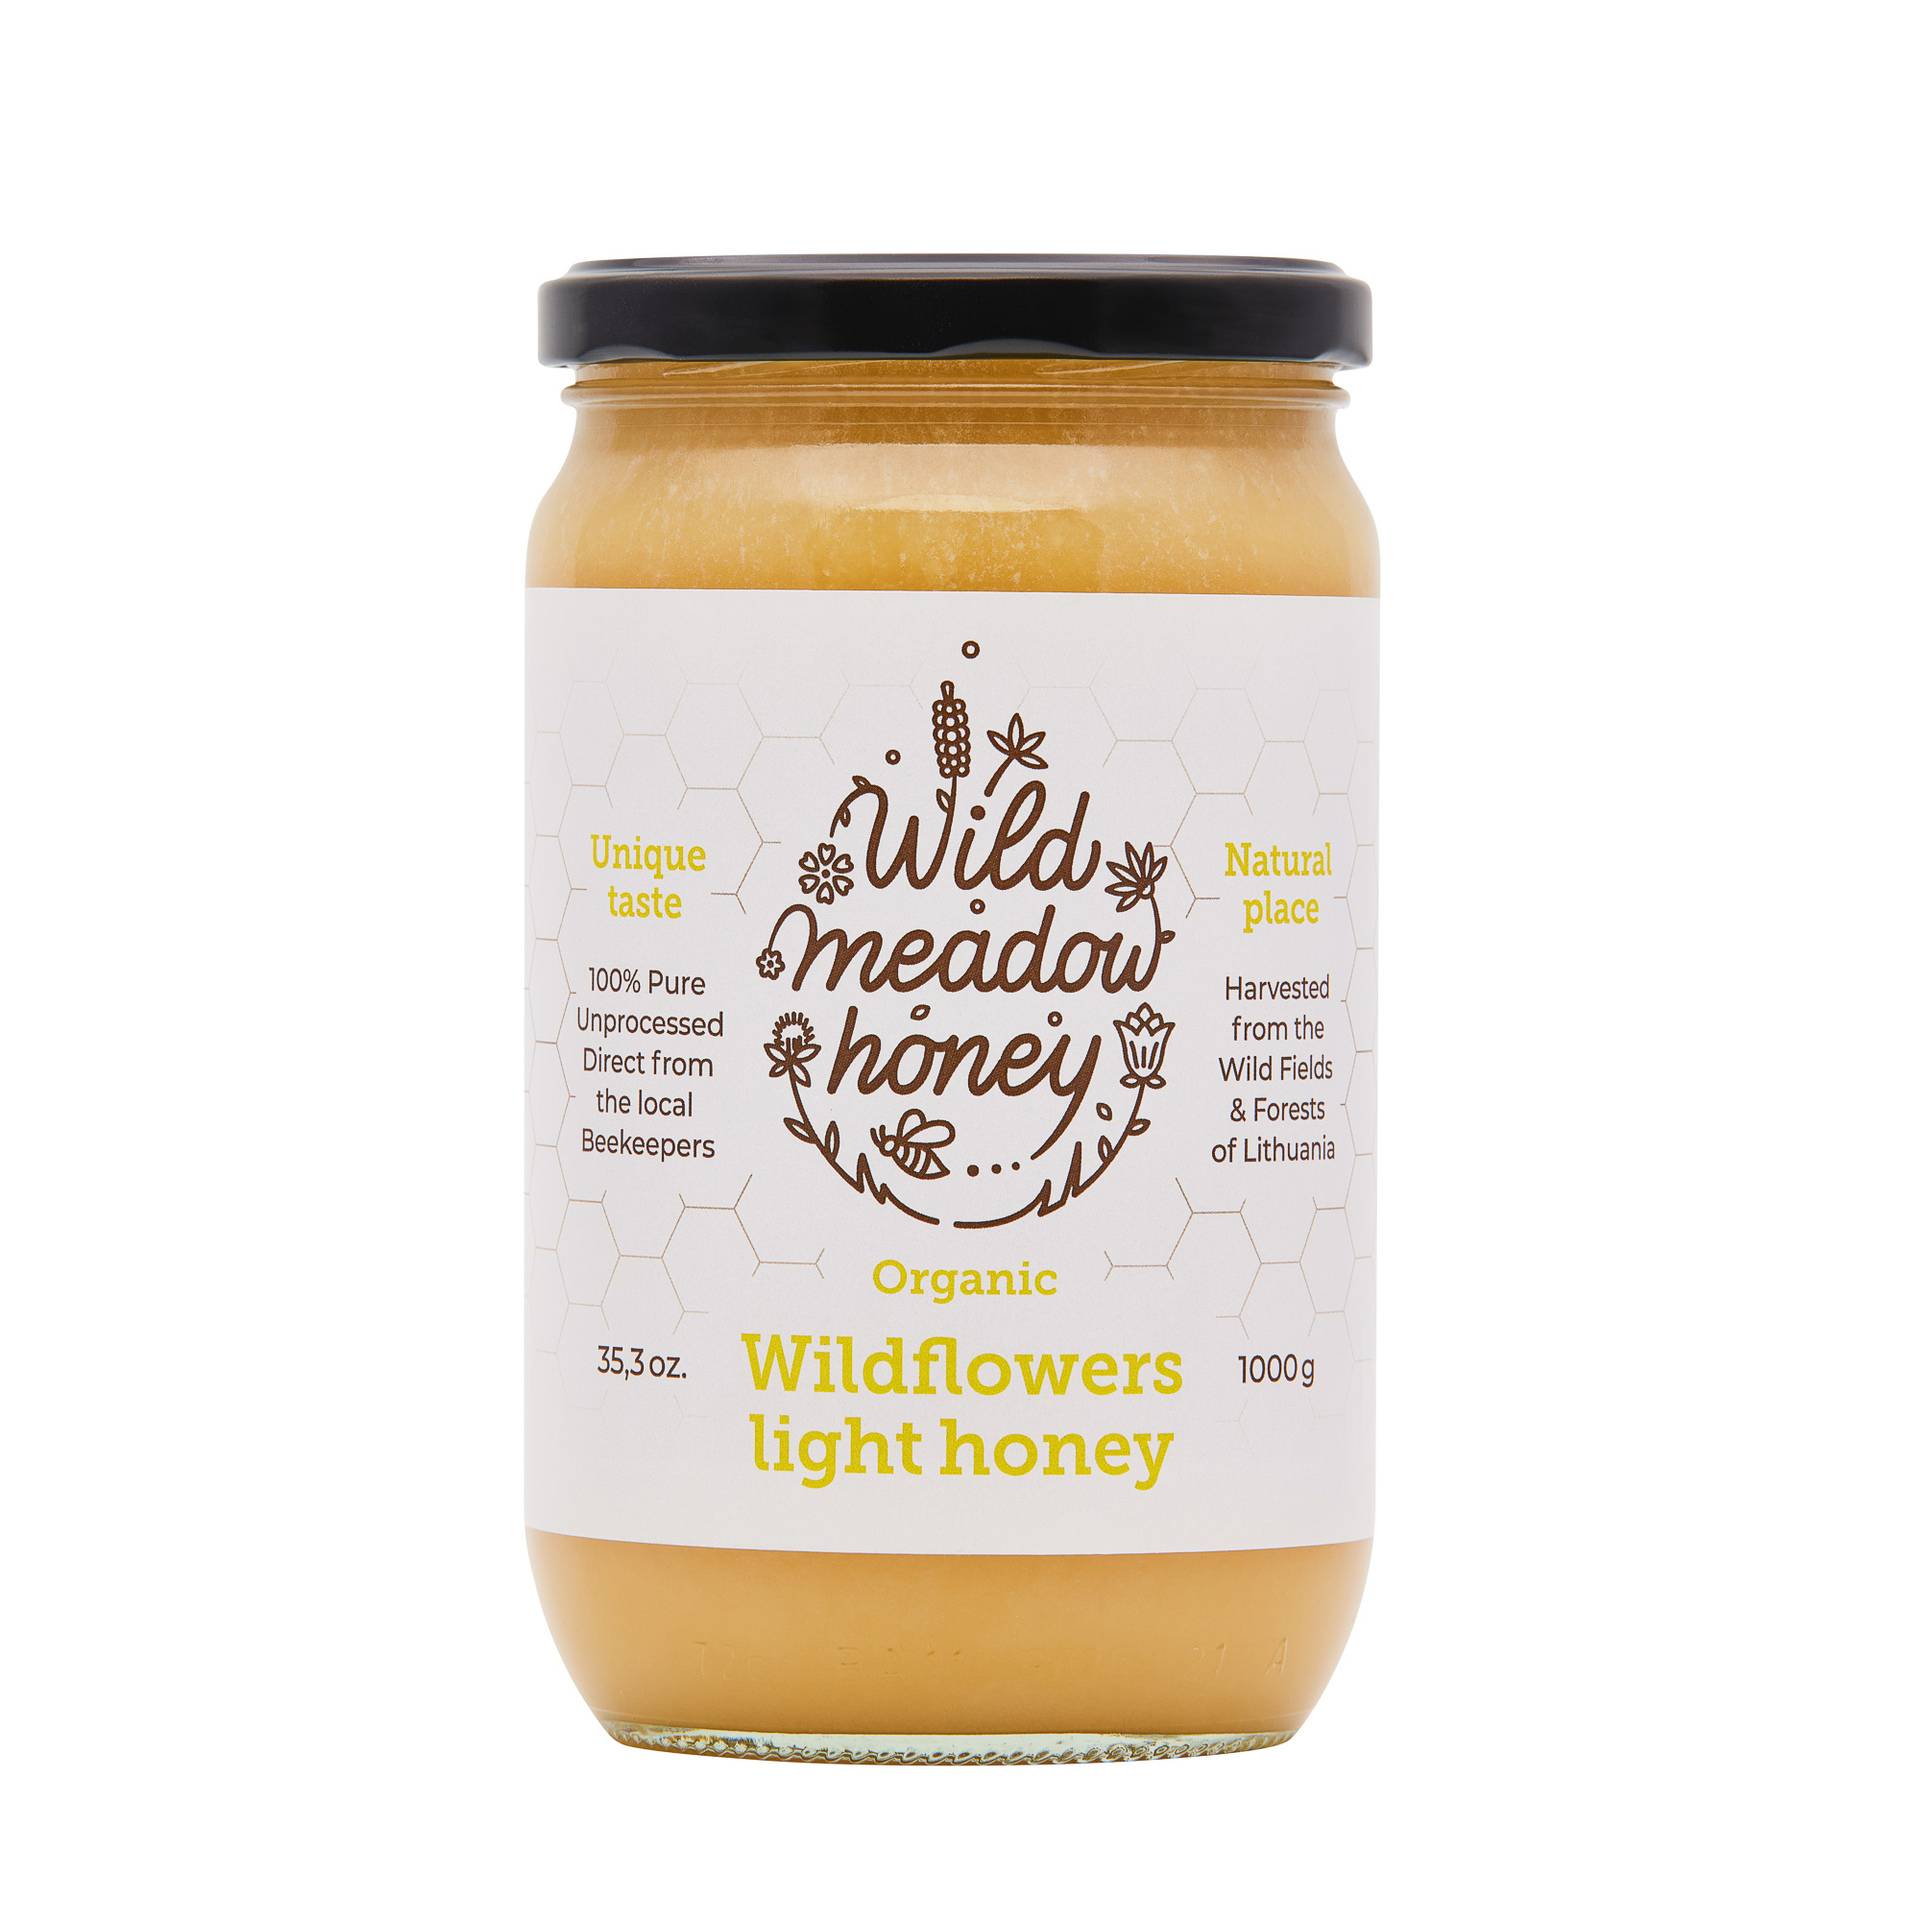 Organic wildflowers light honey